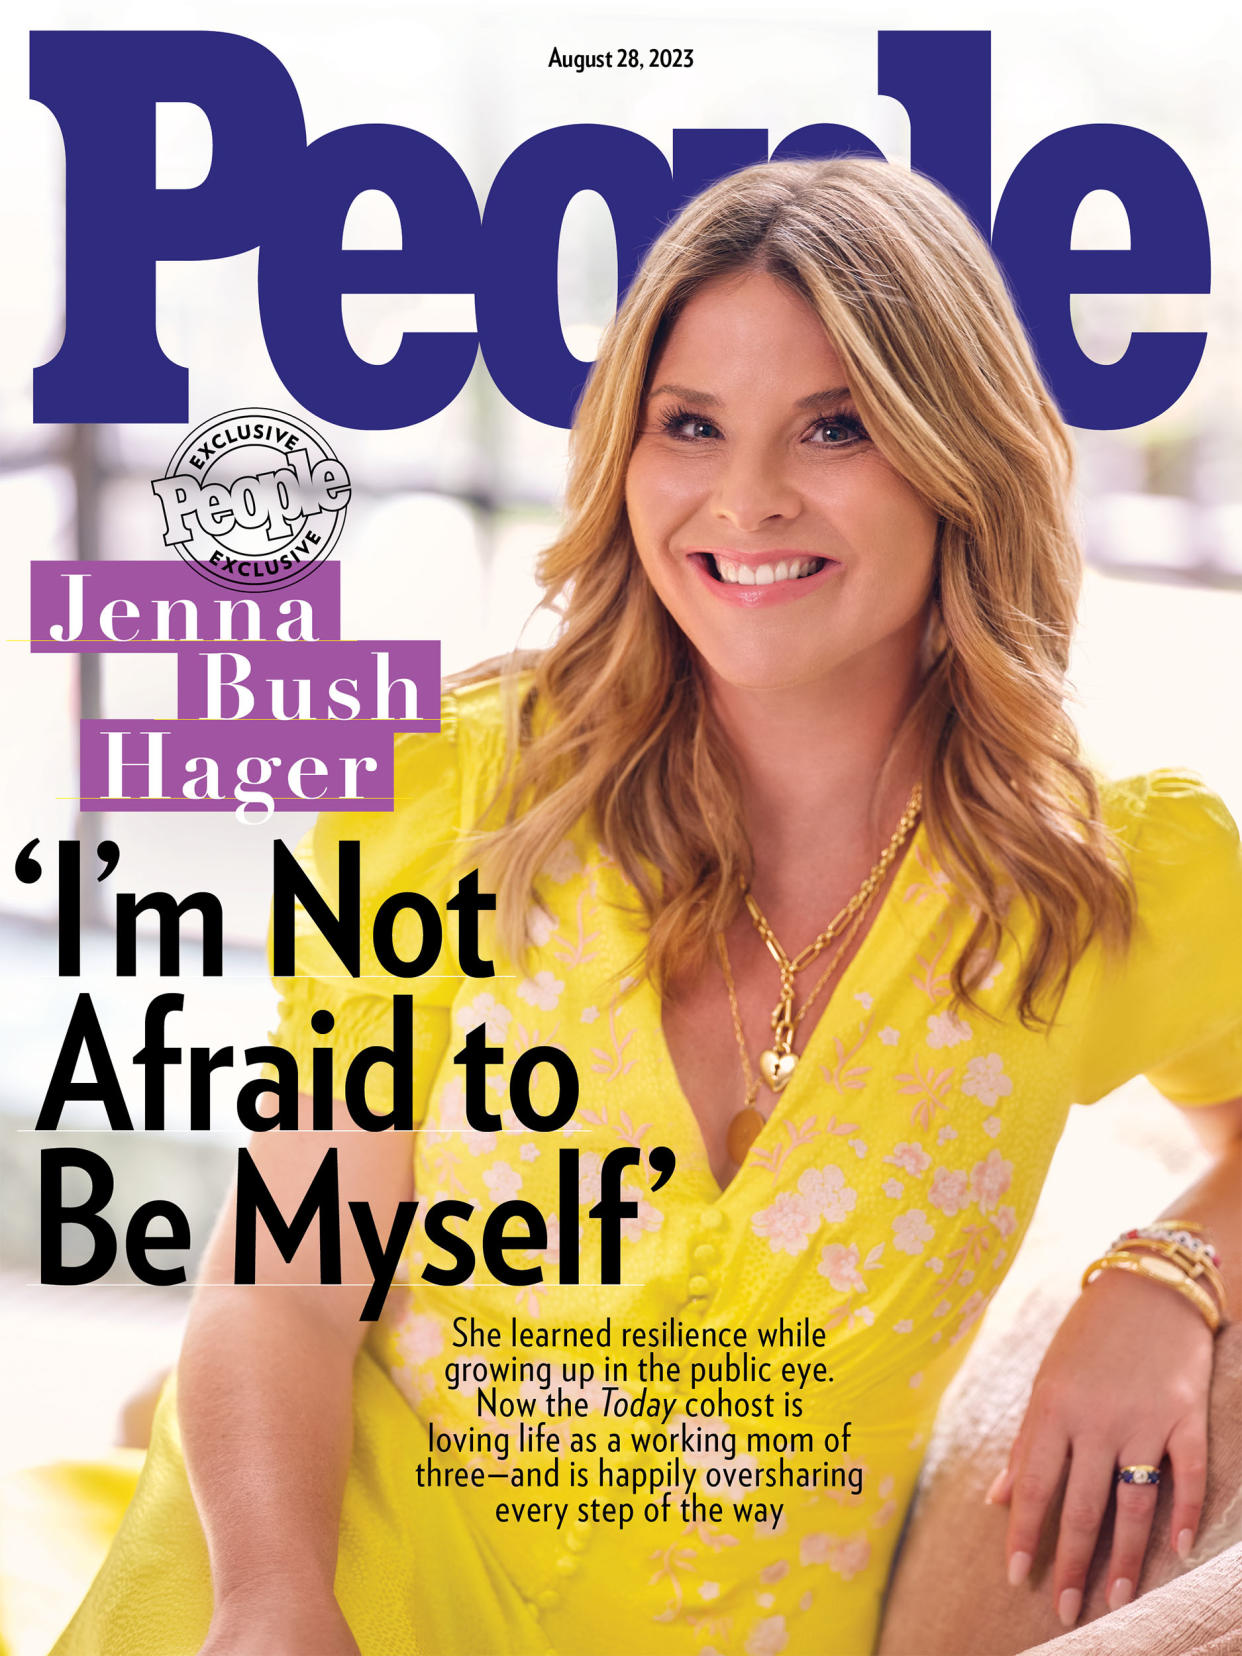 Jenna Bush Hager People magazine cover (People)